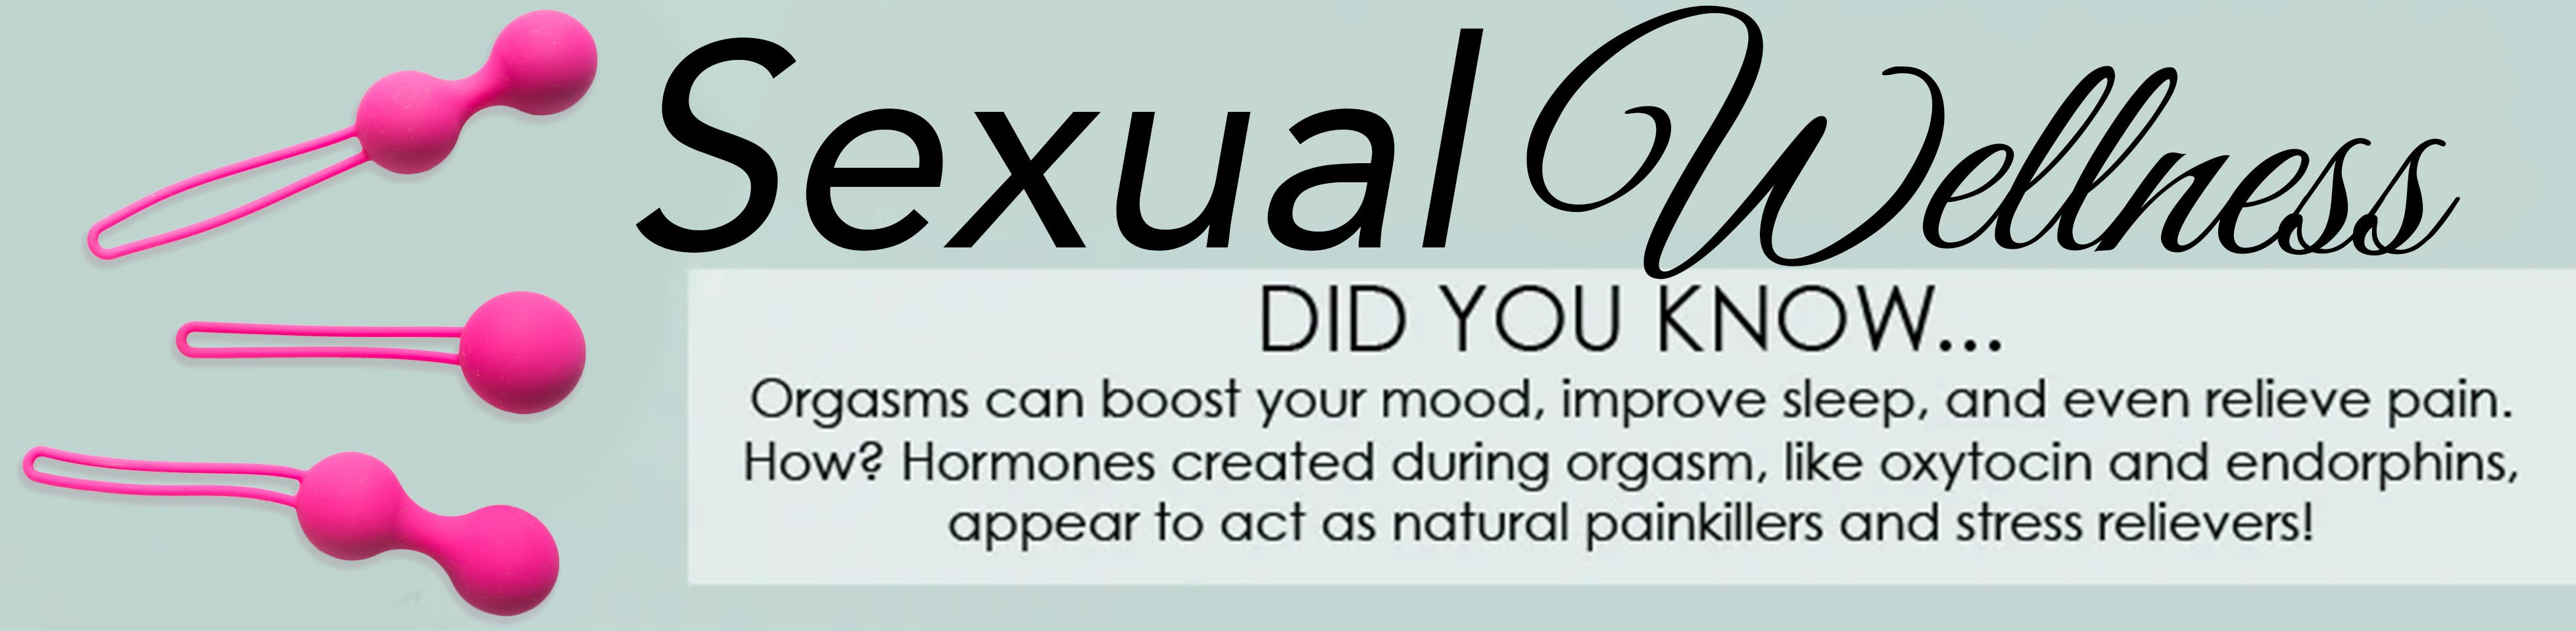 Sexual Wellness Header image 